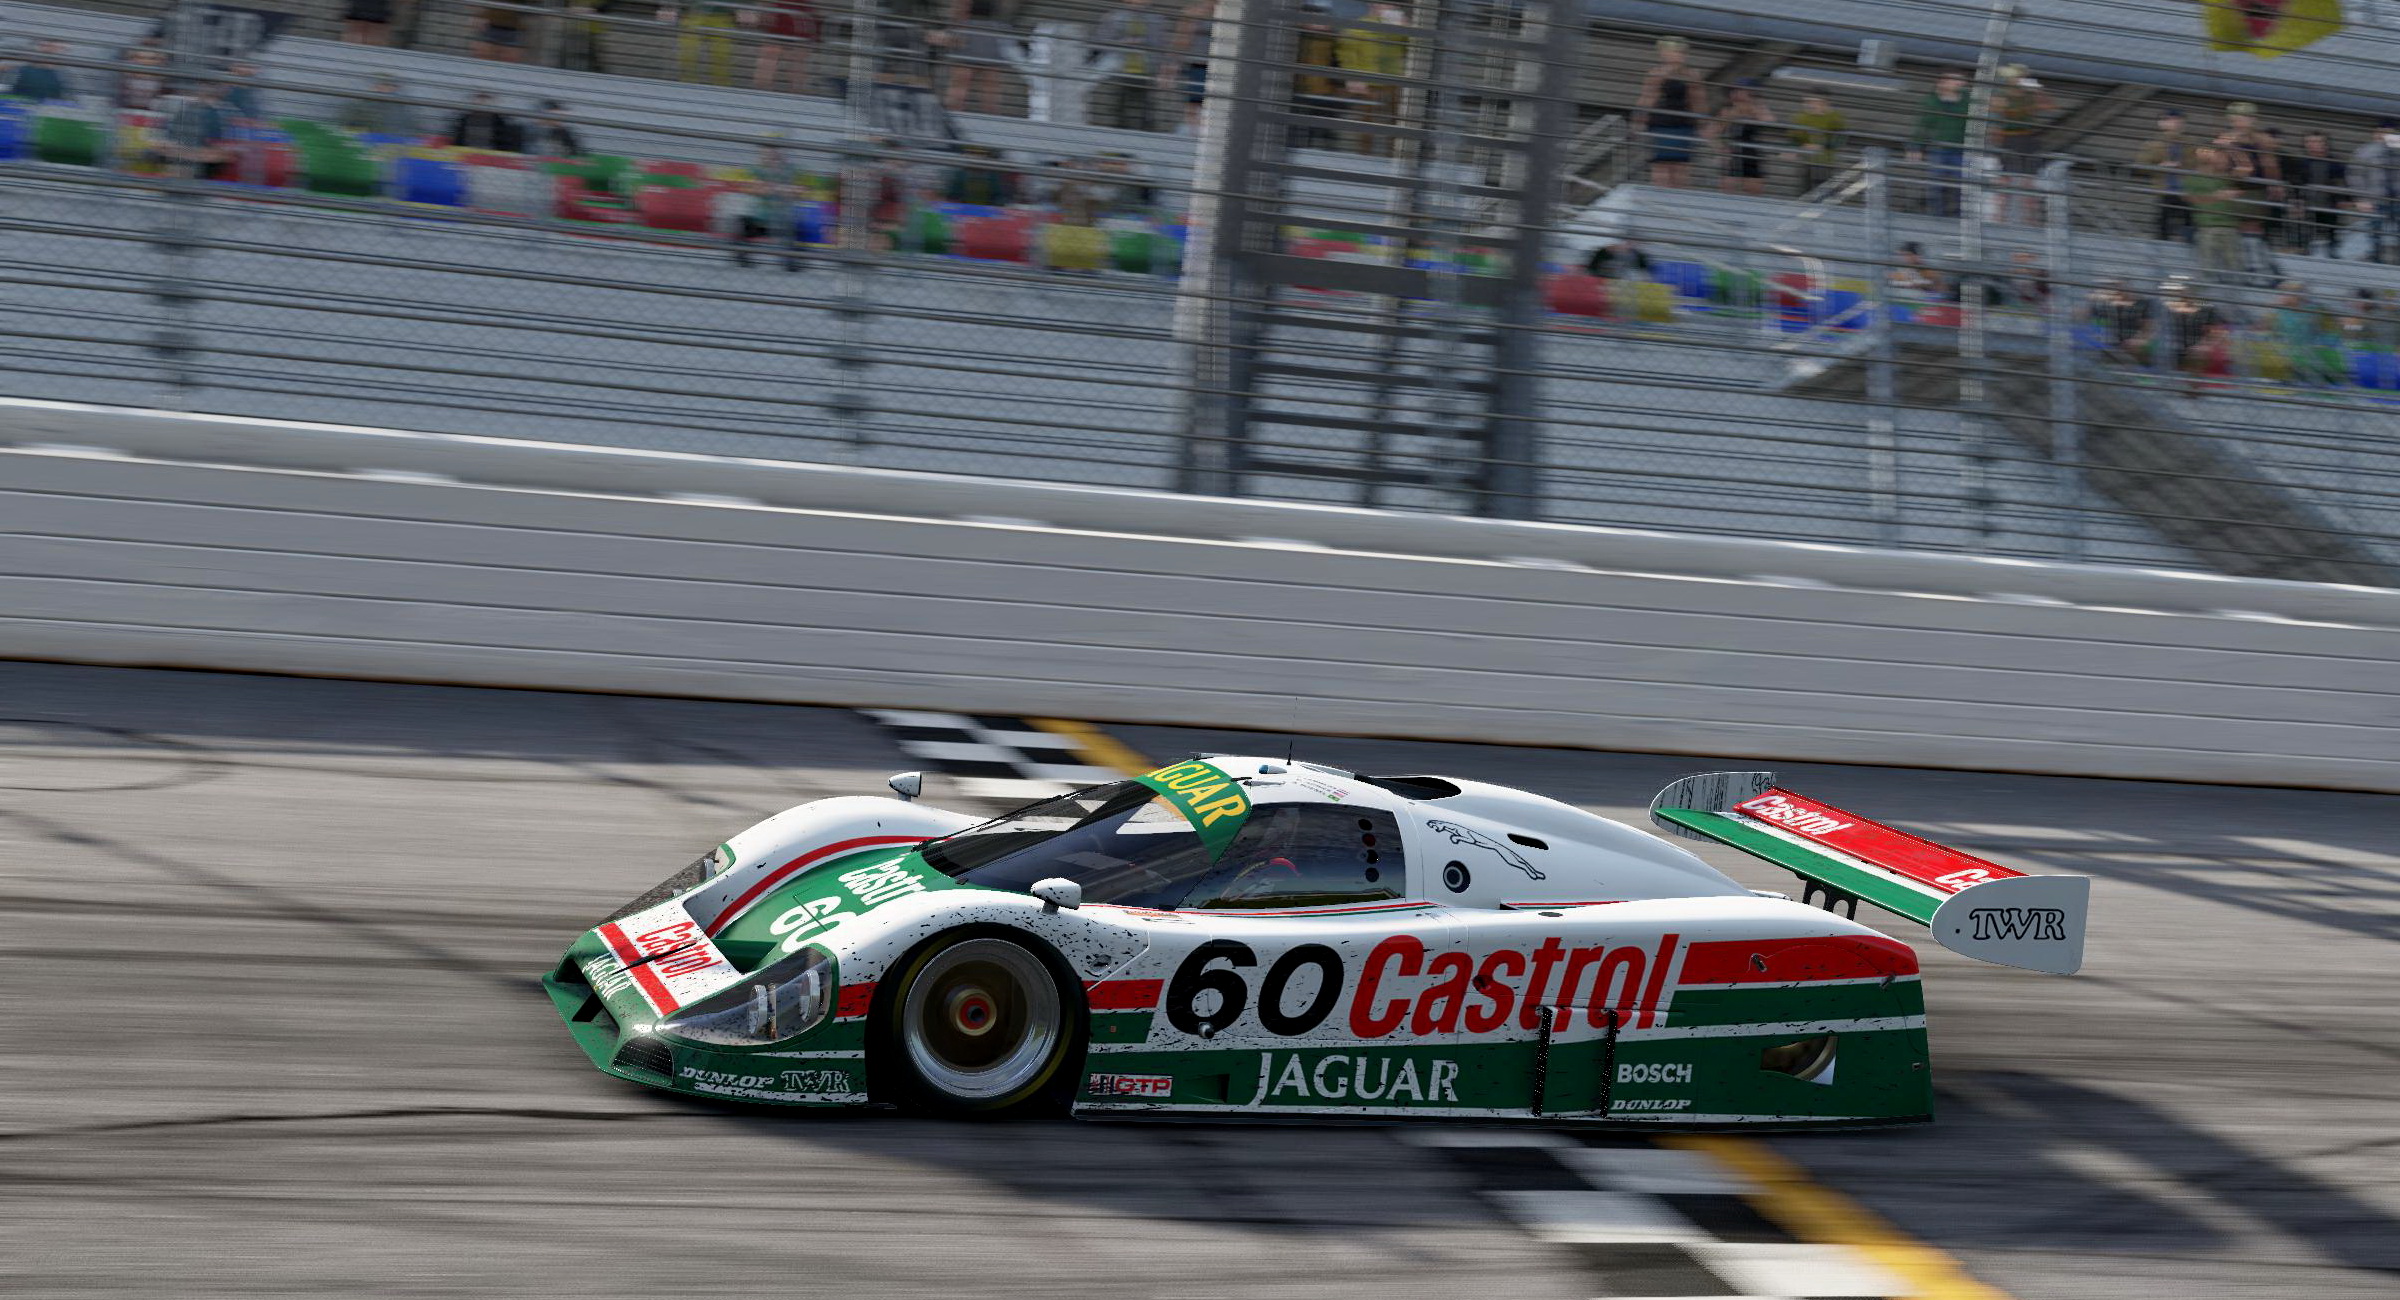 'Castrol' Jaguar Daytona 24 Hours CC.jpg